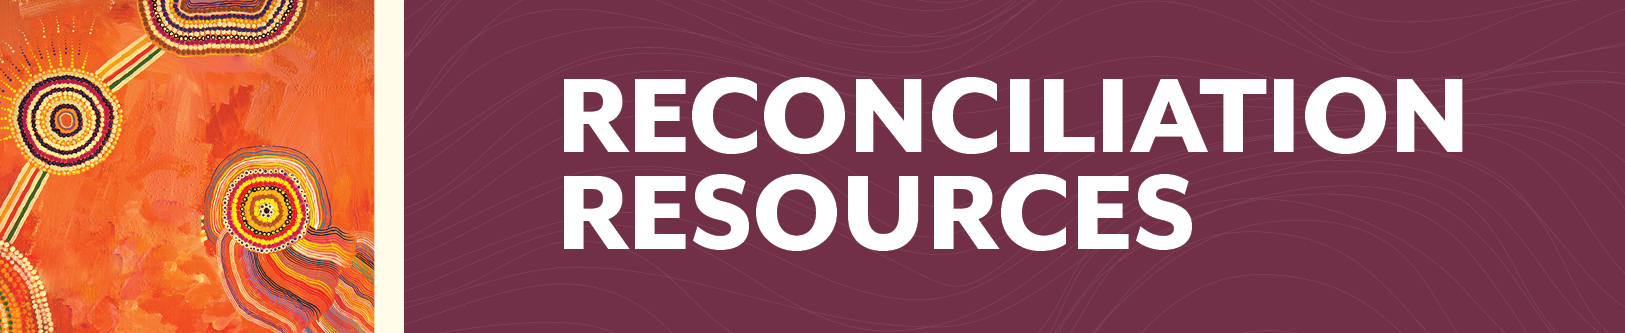 Reconciliation Resources